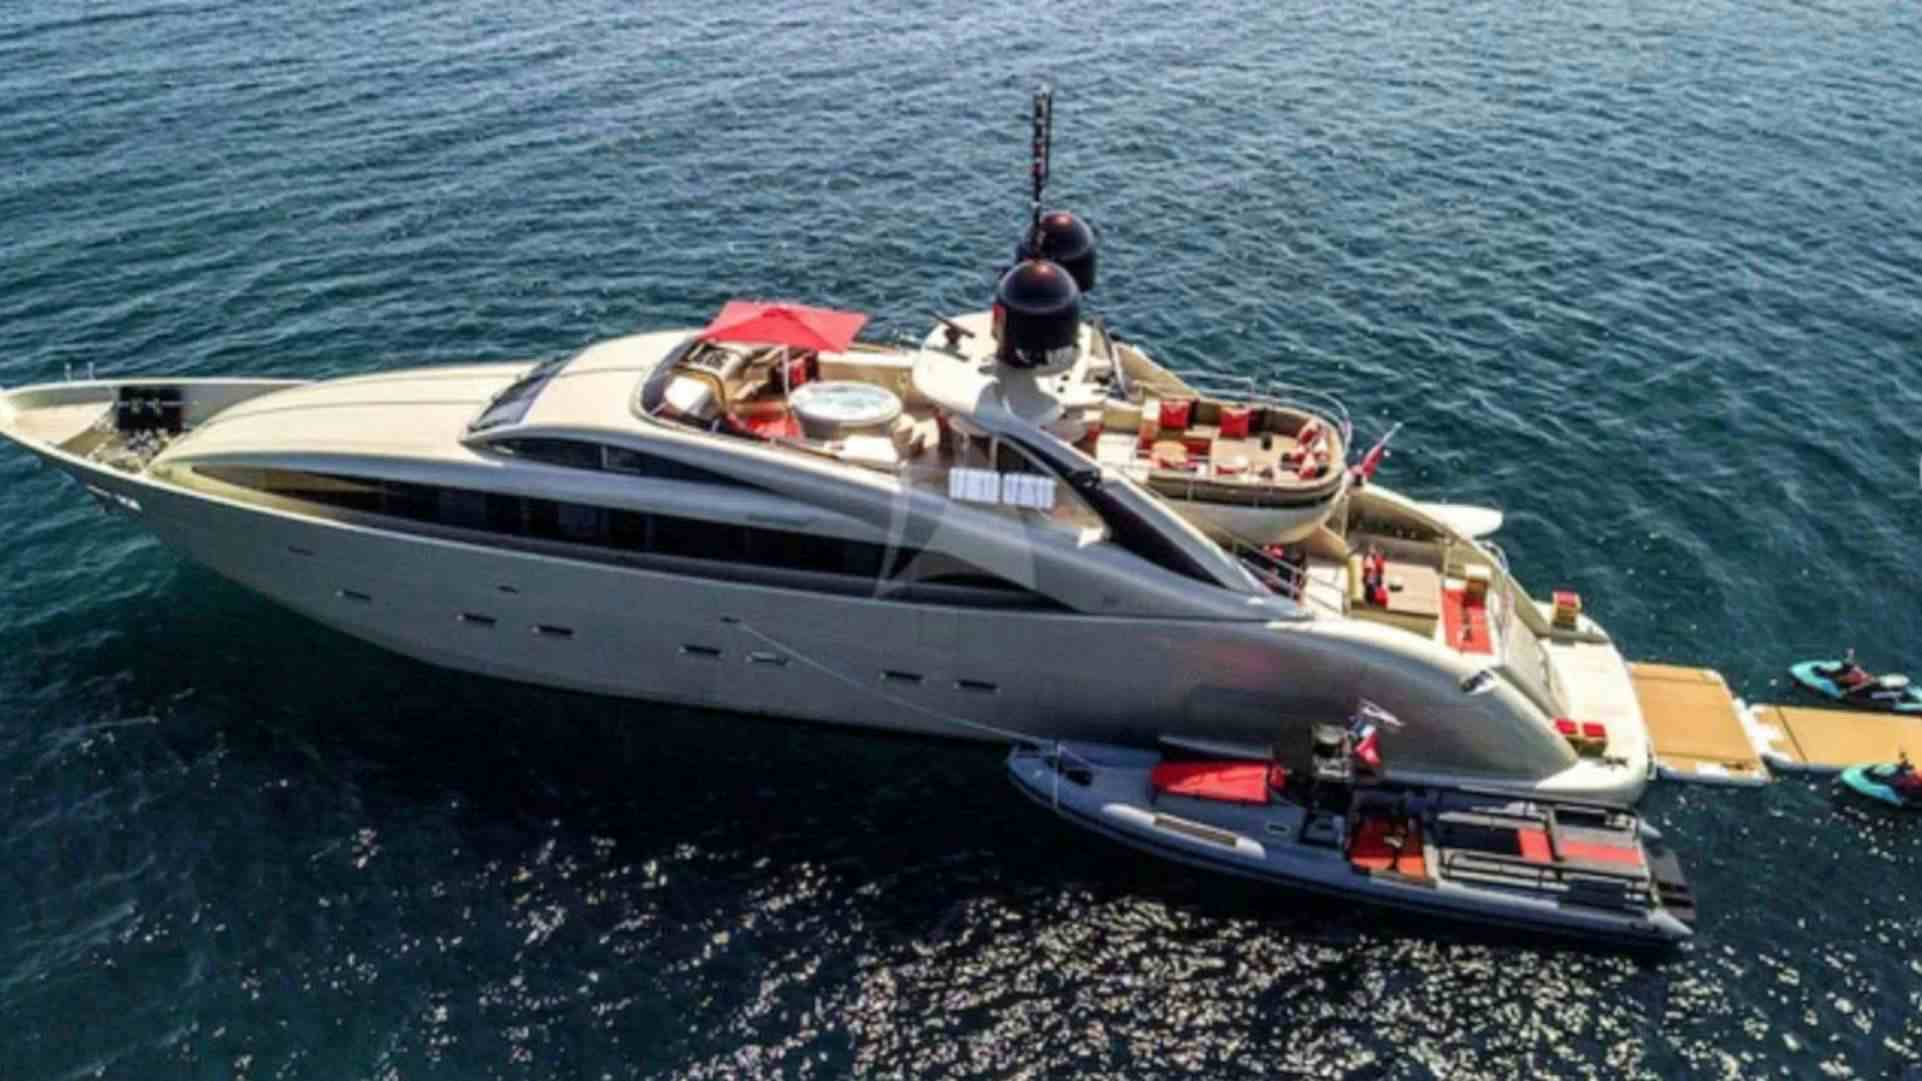 YCM 120 - Yacht Charter Ibiza & Boat hire in Riviera, Corsica, Sardinia, Spain, Balearics, Caribbean 1